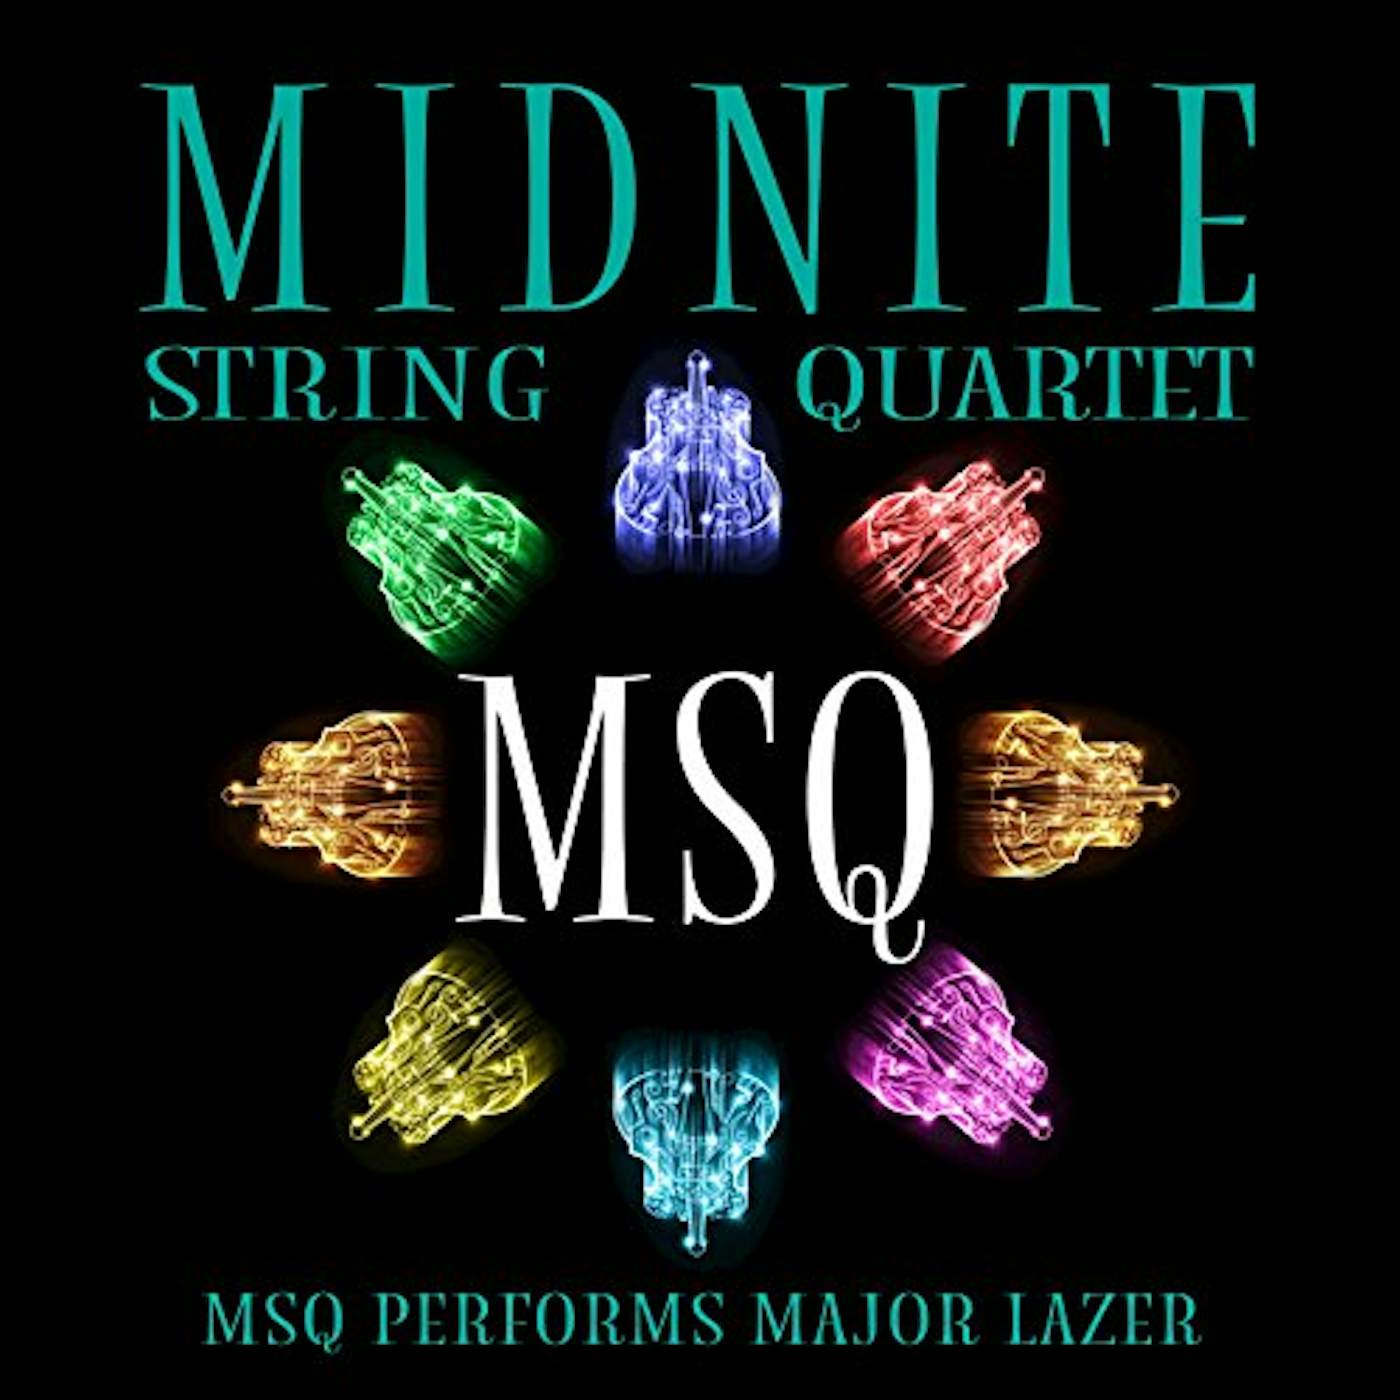 Midnite String Quartet MSQ PERFORMS MAJOR LAZER (MOD) CD